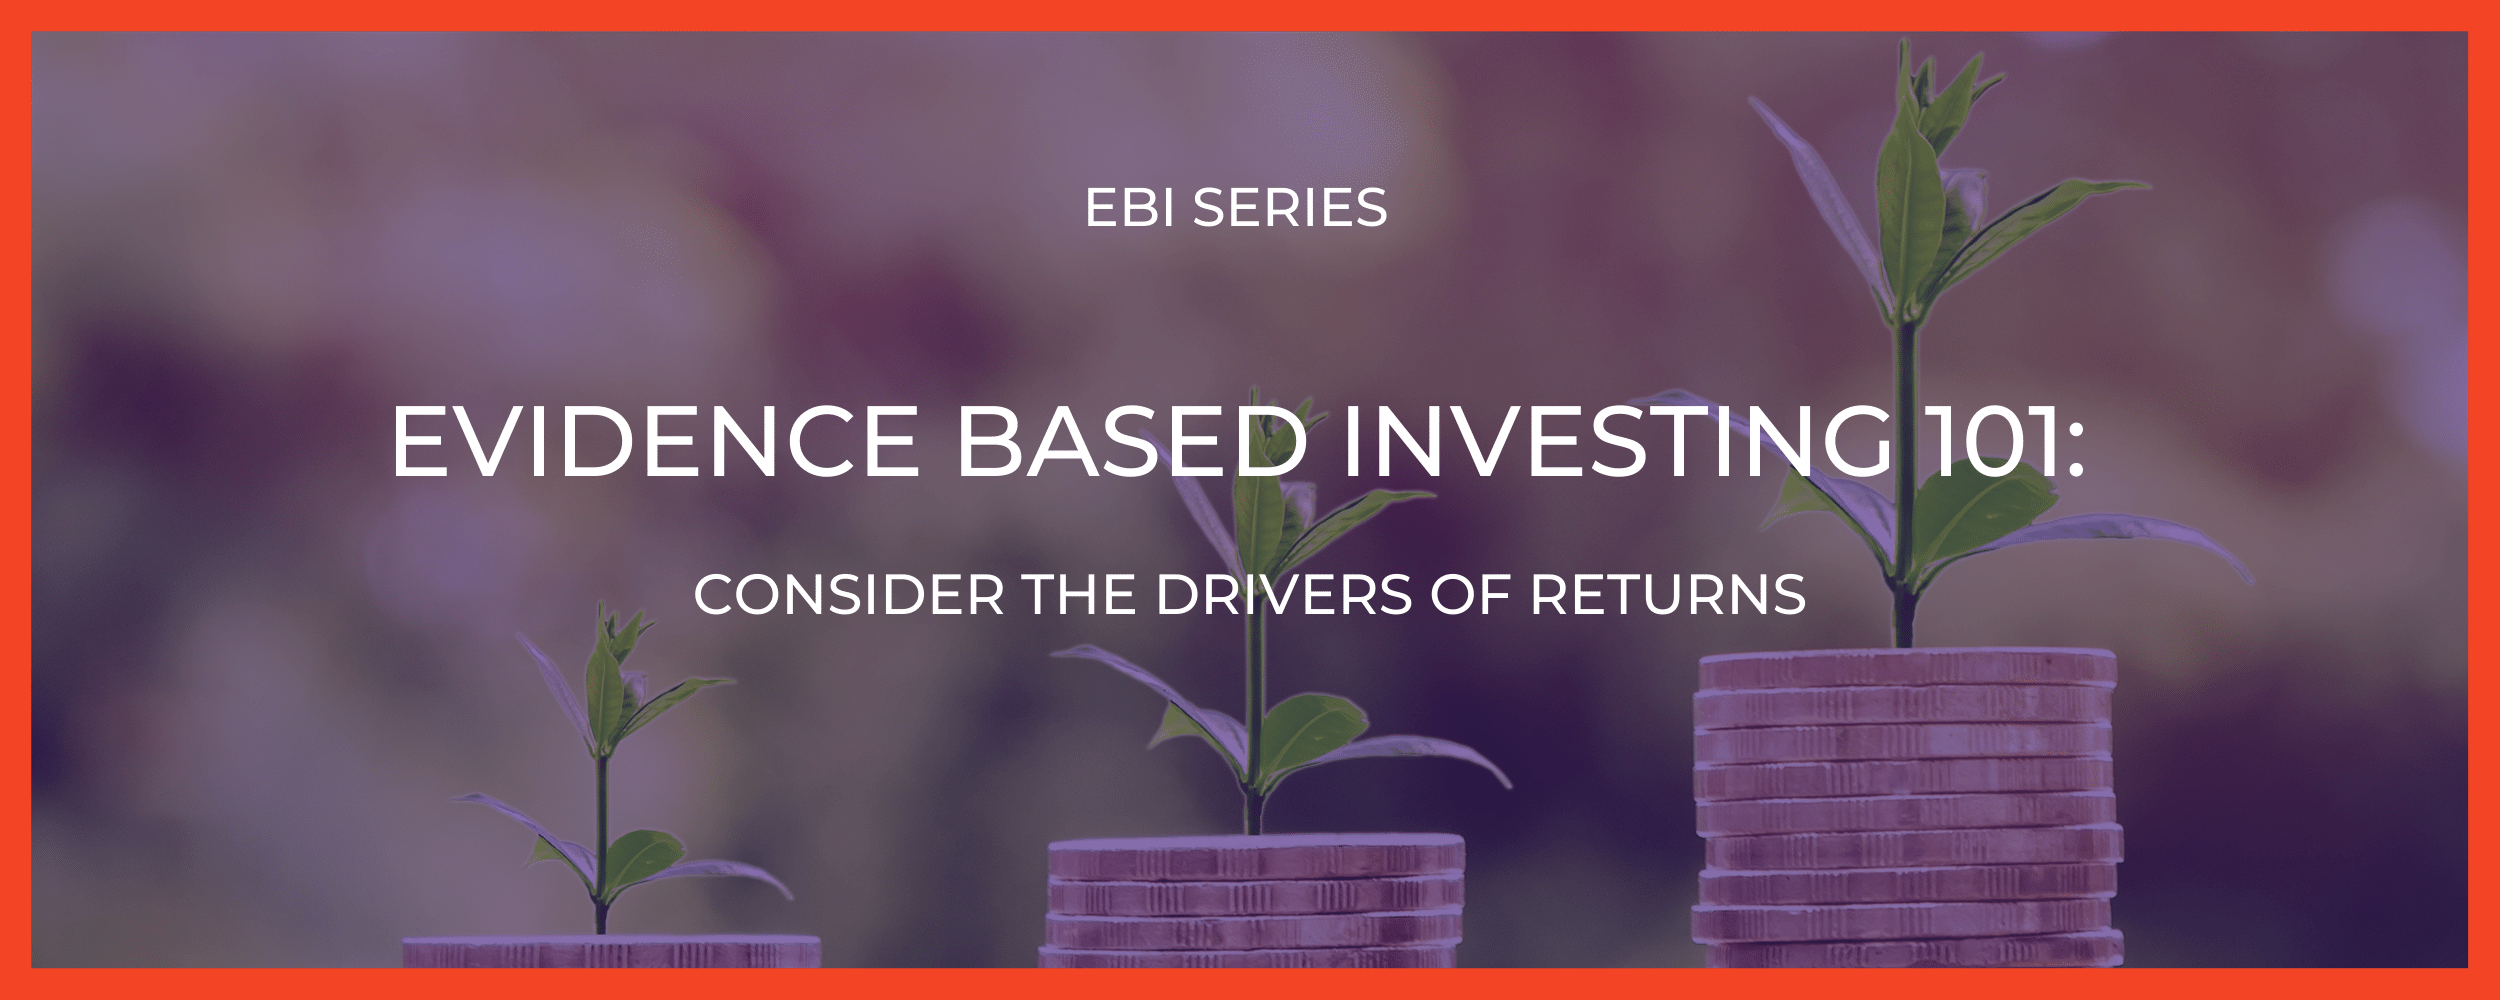 EBI Consider the drivers of returns